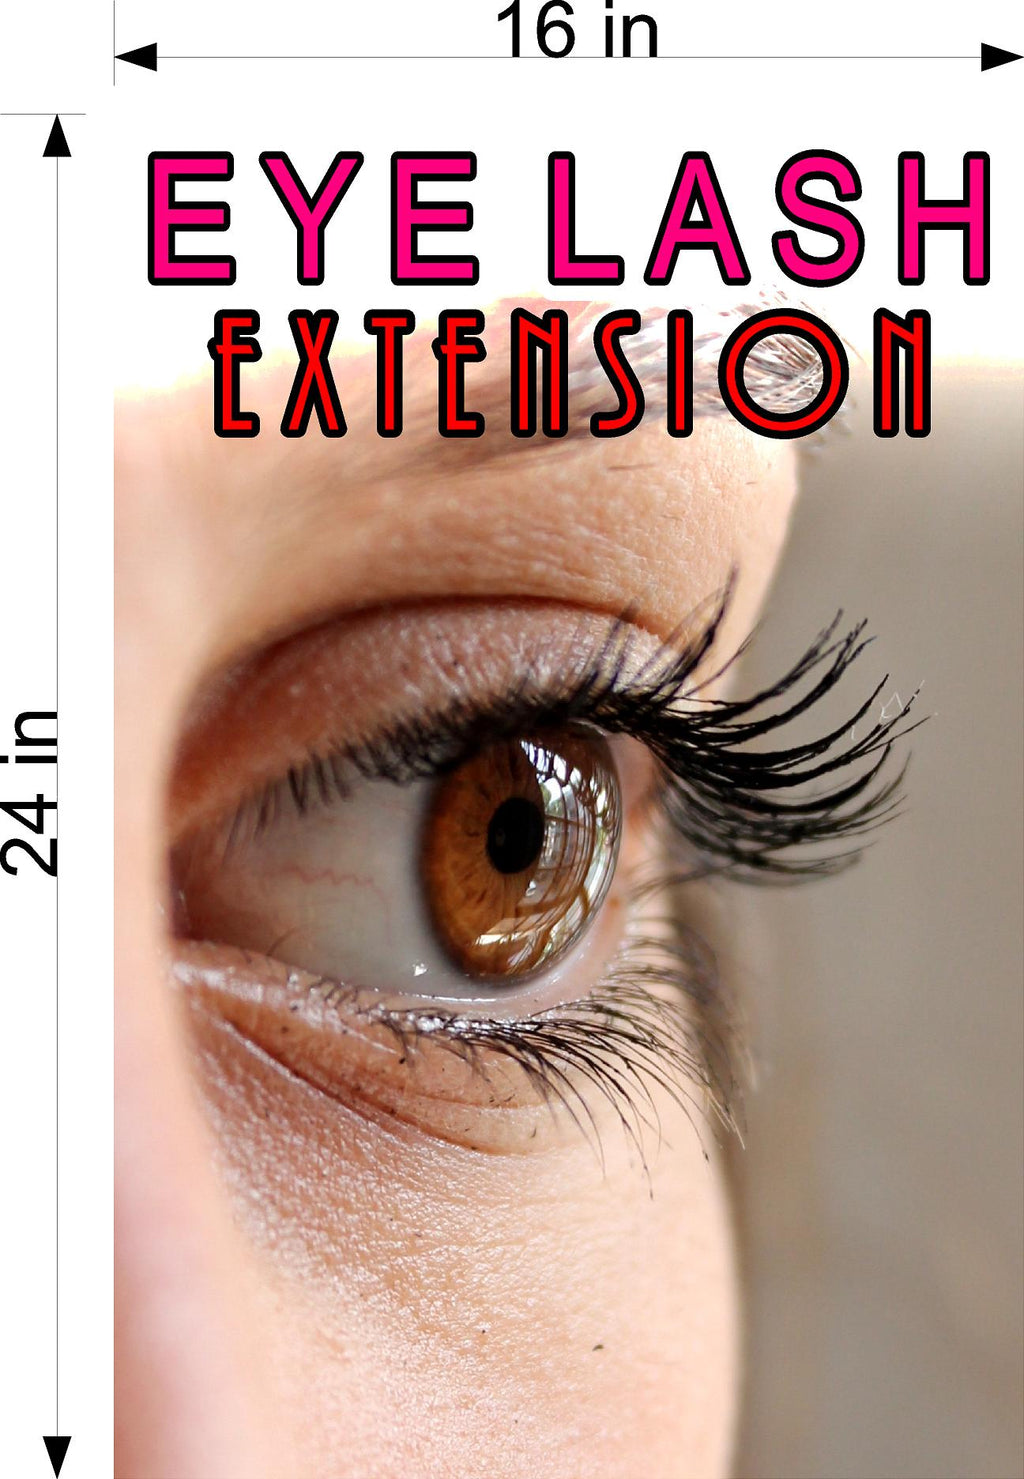 Eyelash 05 Perforated Mesh One Way Vision See-Through Window Vinyl Salon Sign Extension Vertical